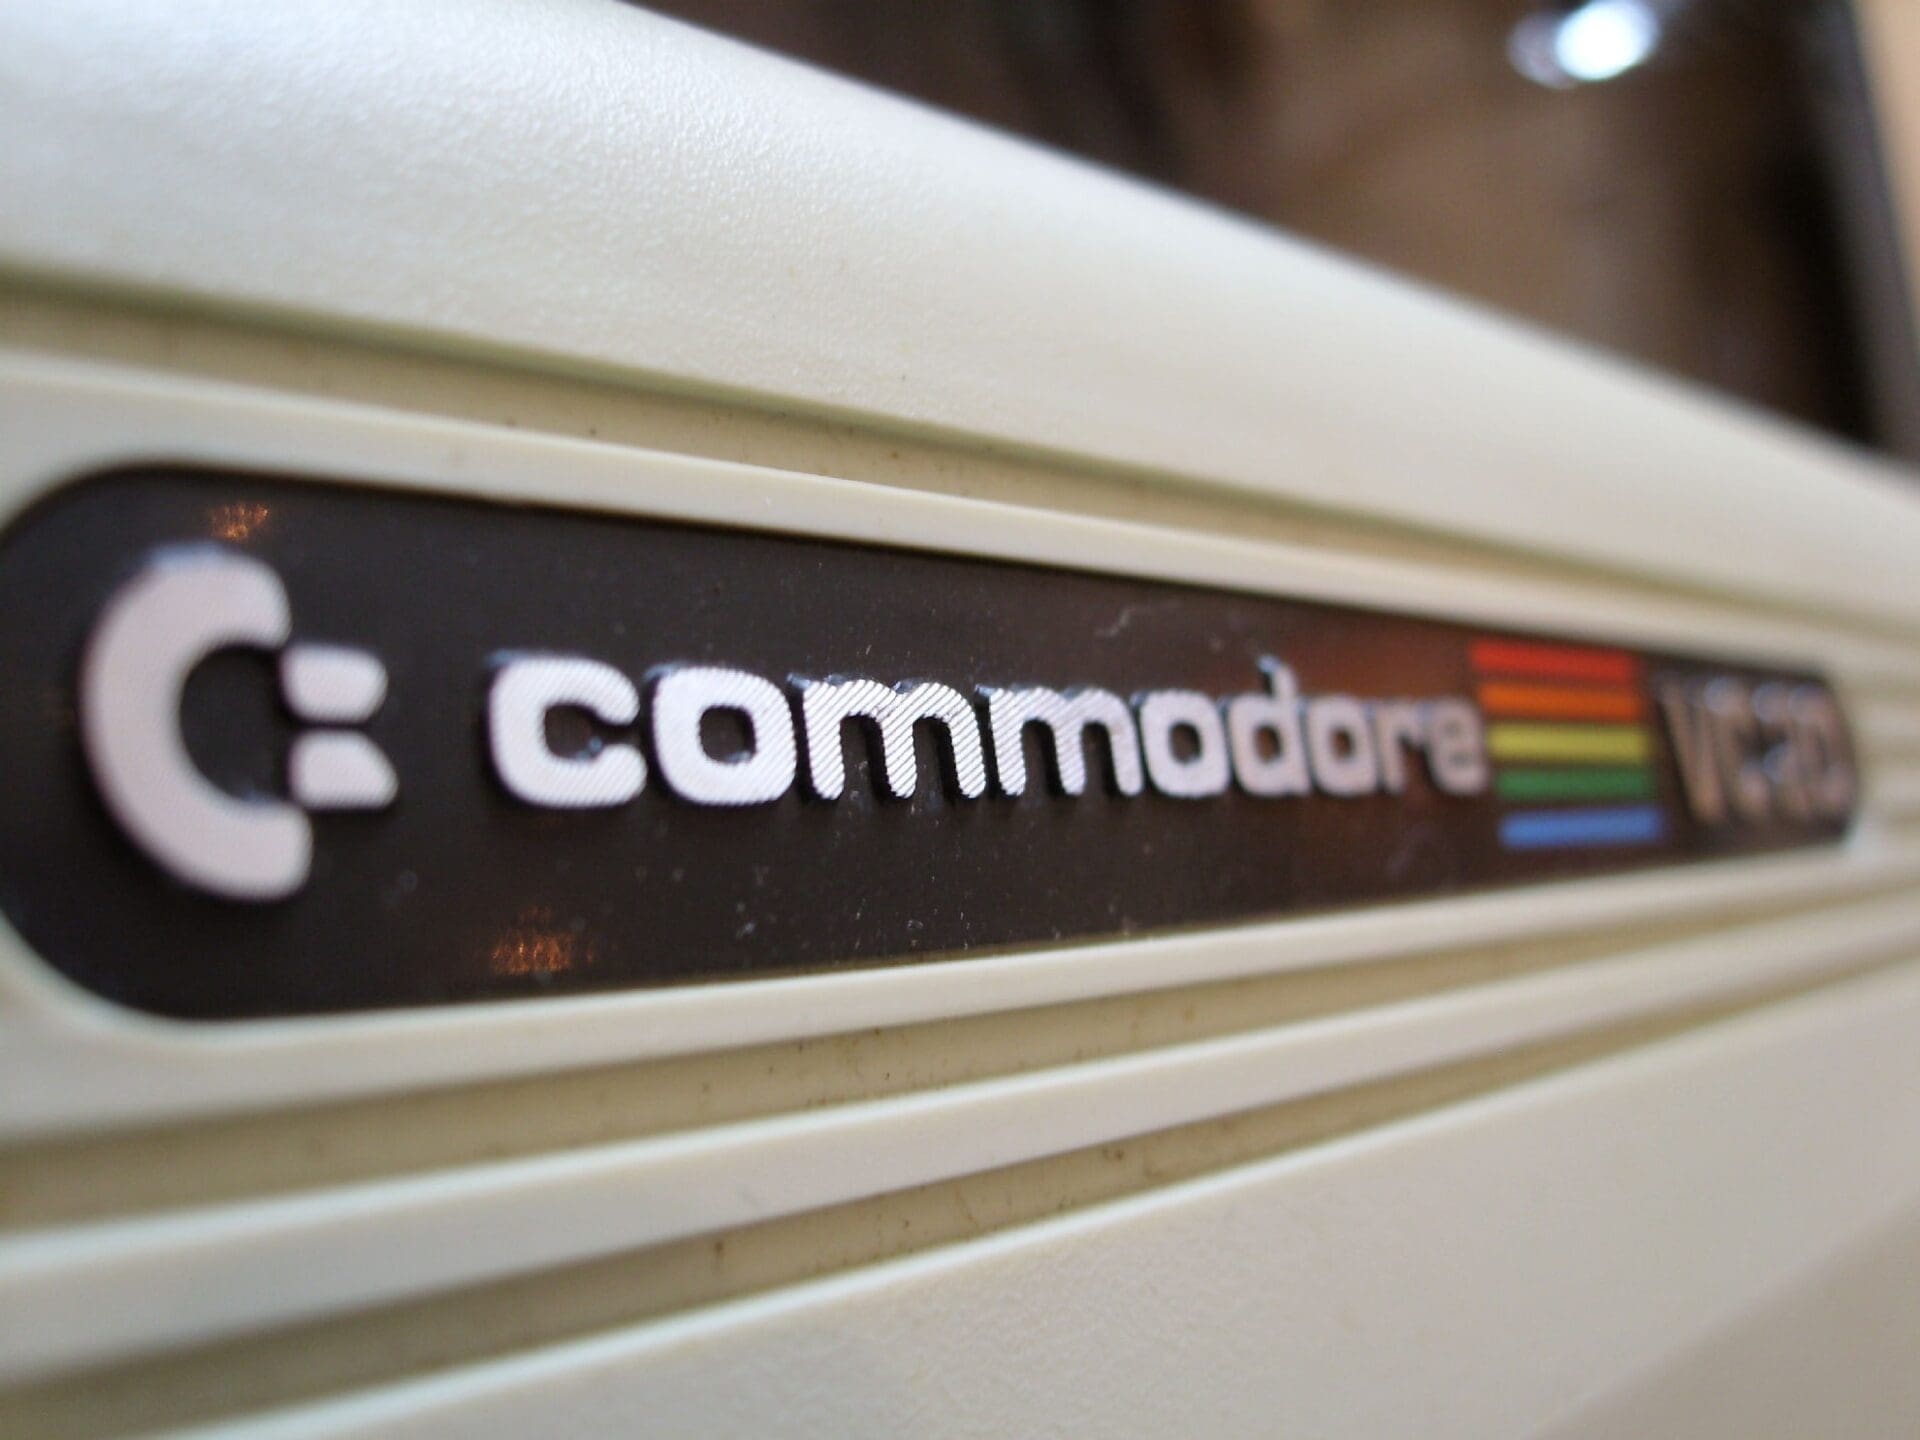 Commodore-Gehäuseunterschiede